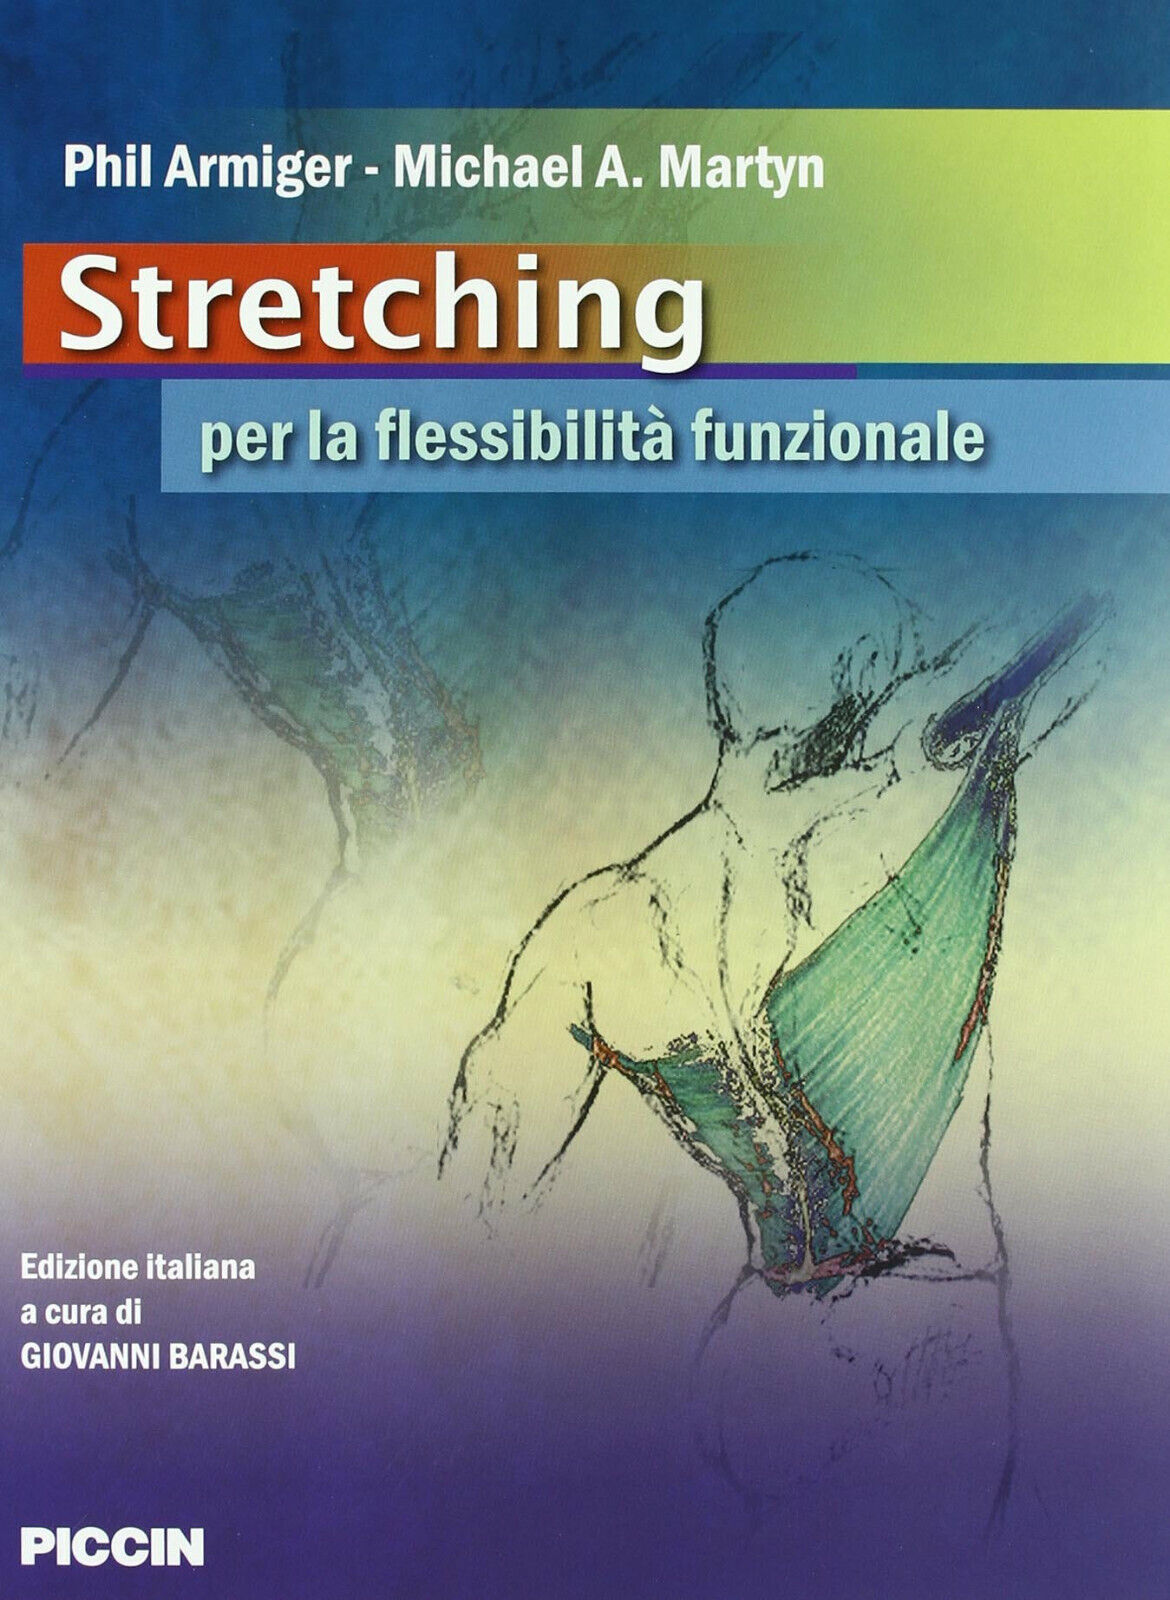 Stretching. Per la flessibilit? funzionale-Phil Armiger, Michael A. Martyn-2010  libro usato